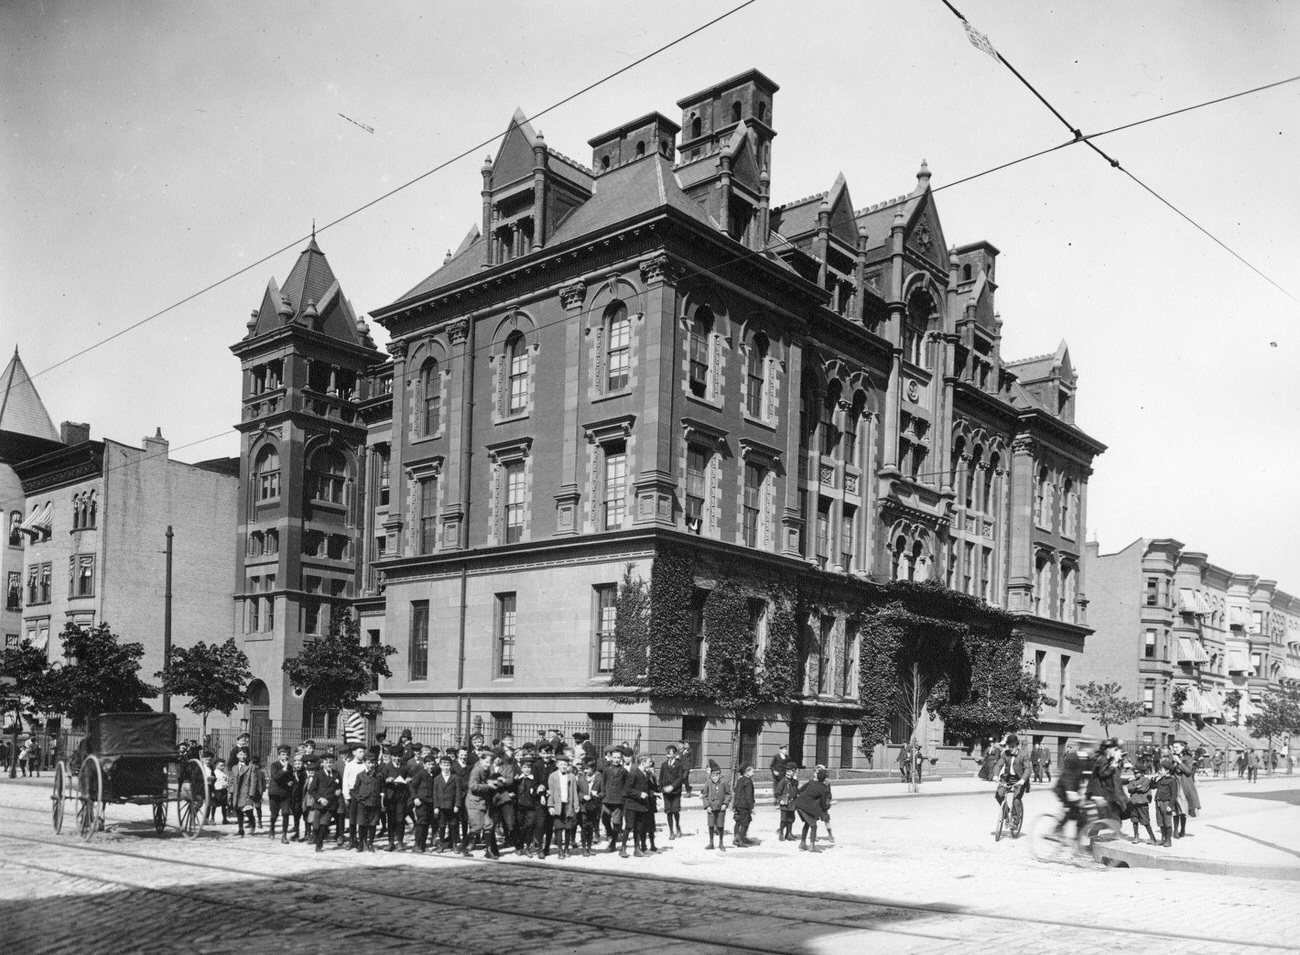 Unidentified School And Crowd Of Schoolchildren On Vanderbilt Street, Brooklyn, 1895